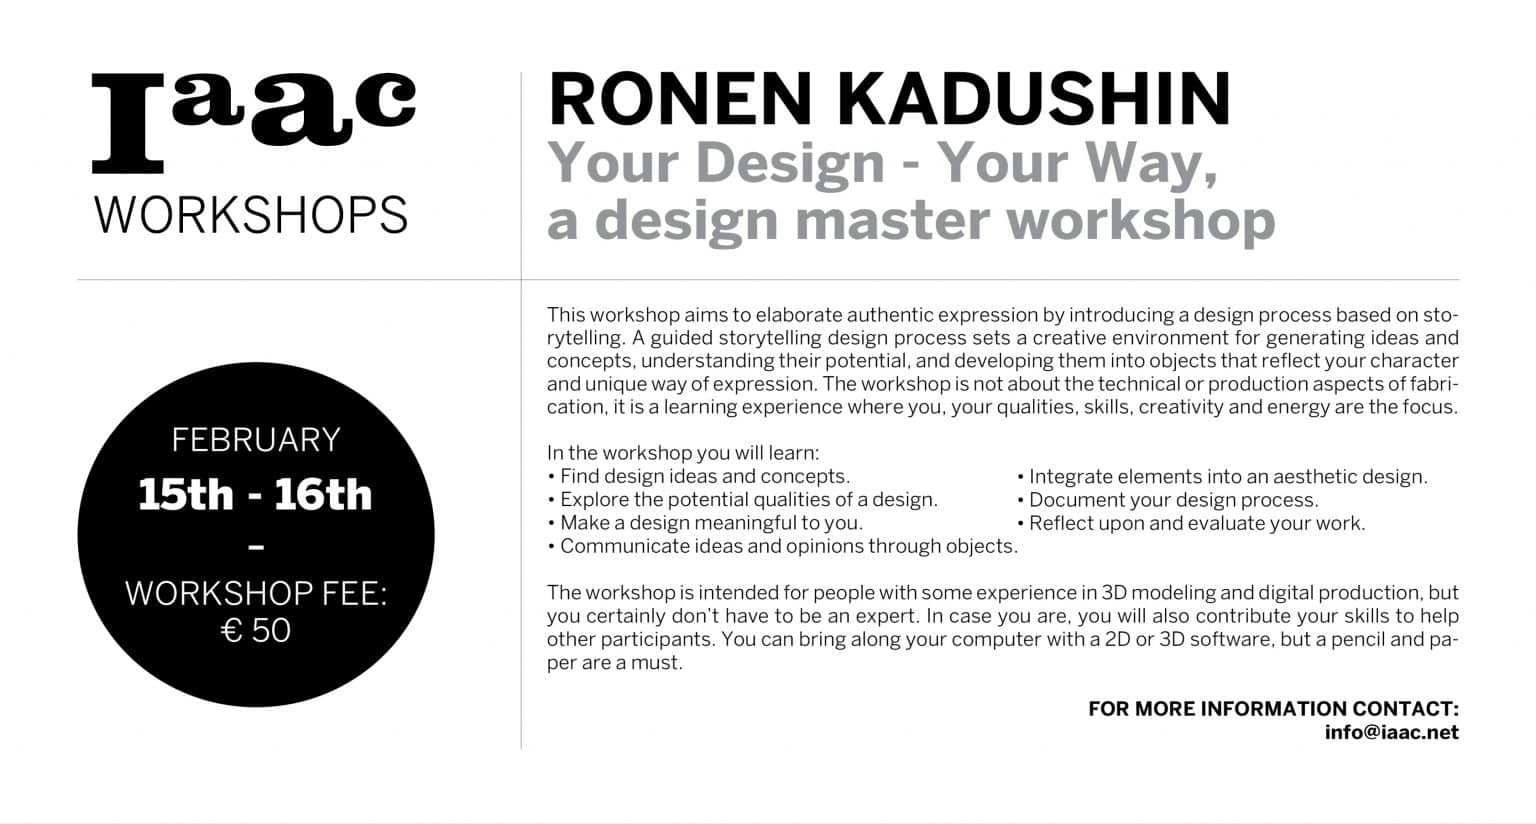 Ronen Kadushin your design - your way, a design master workshop